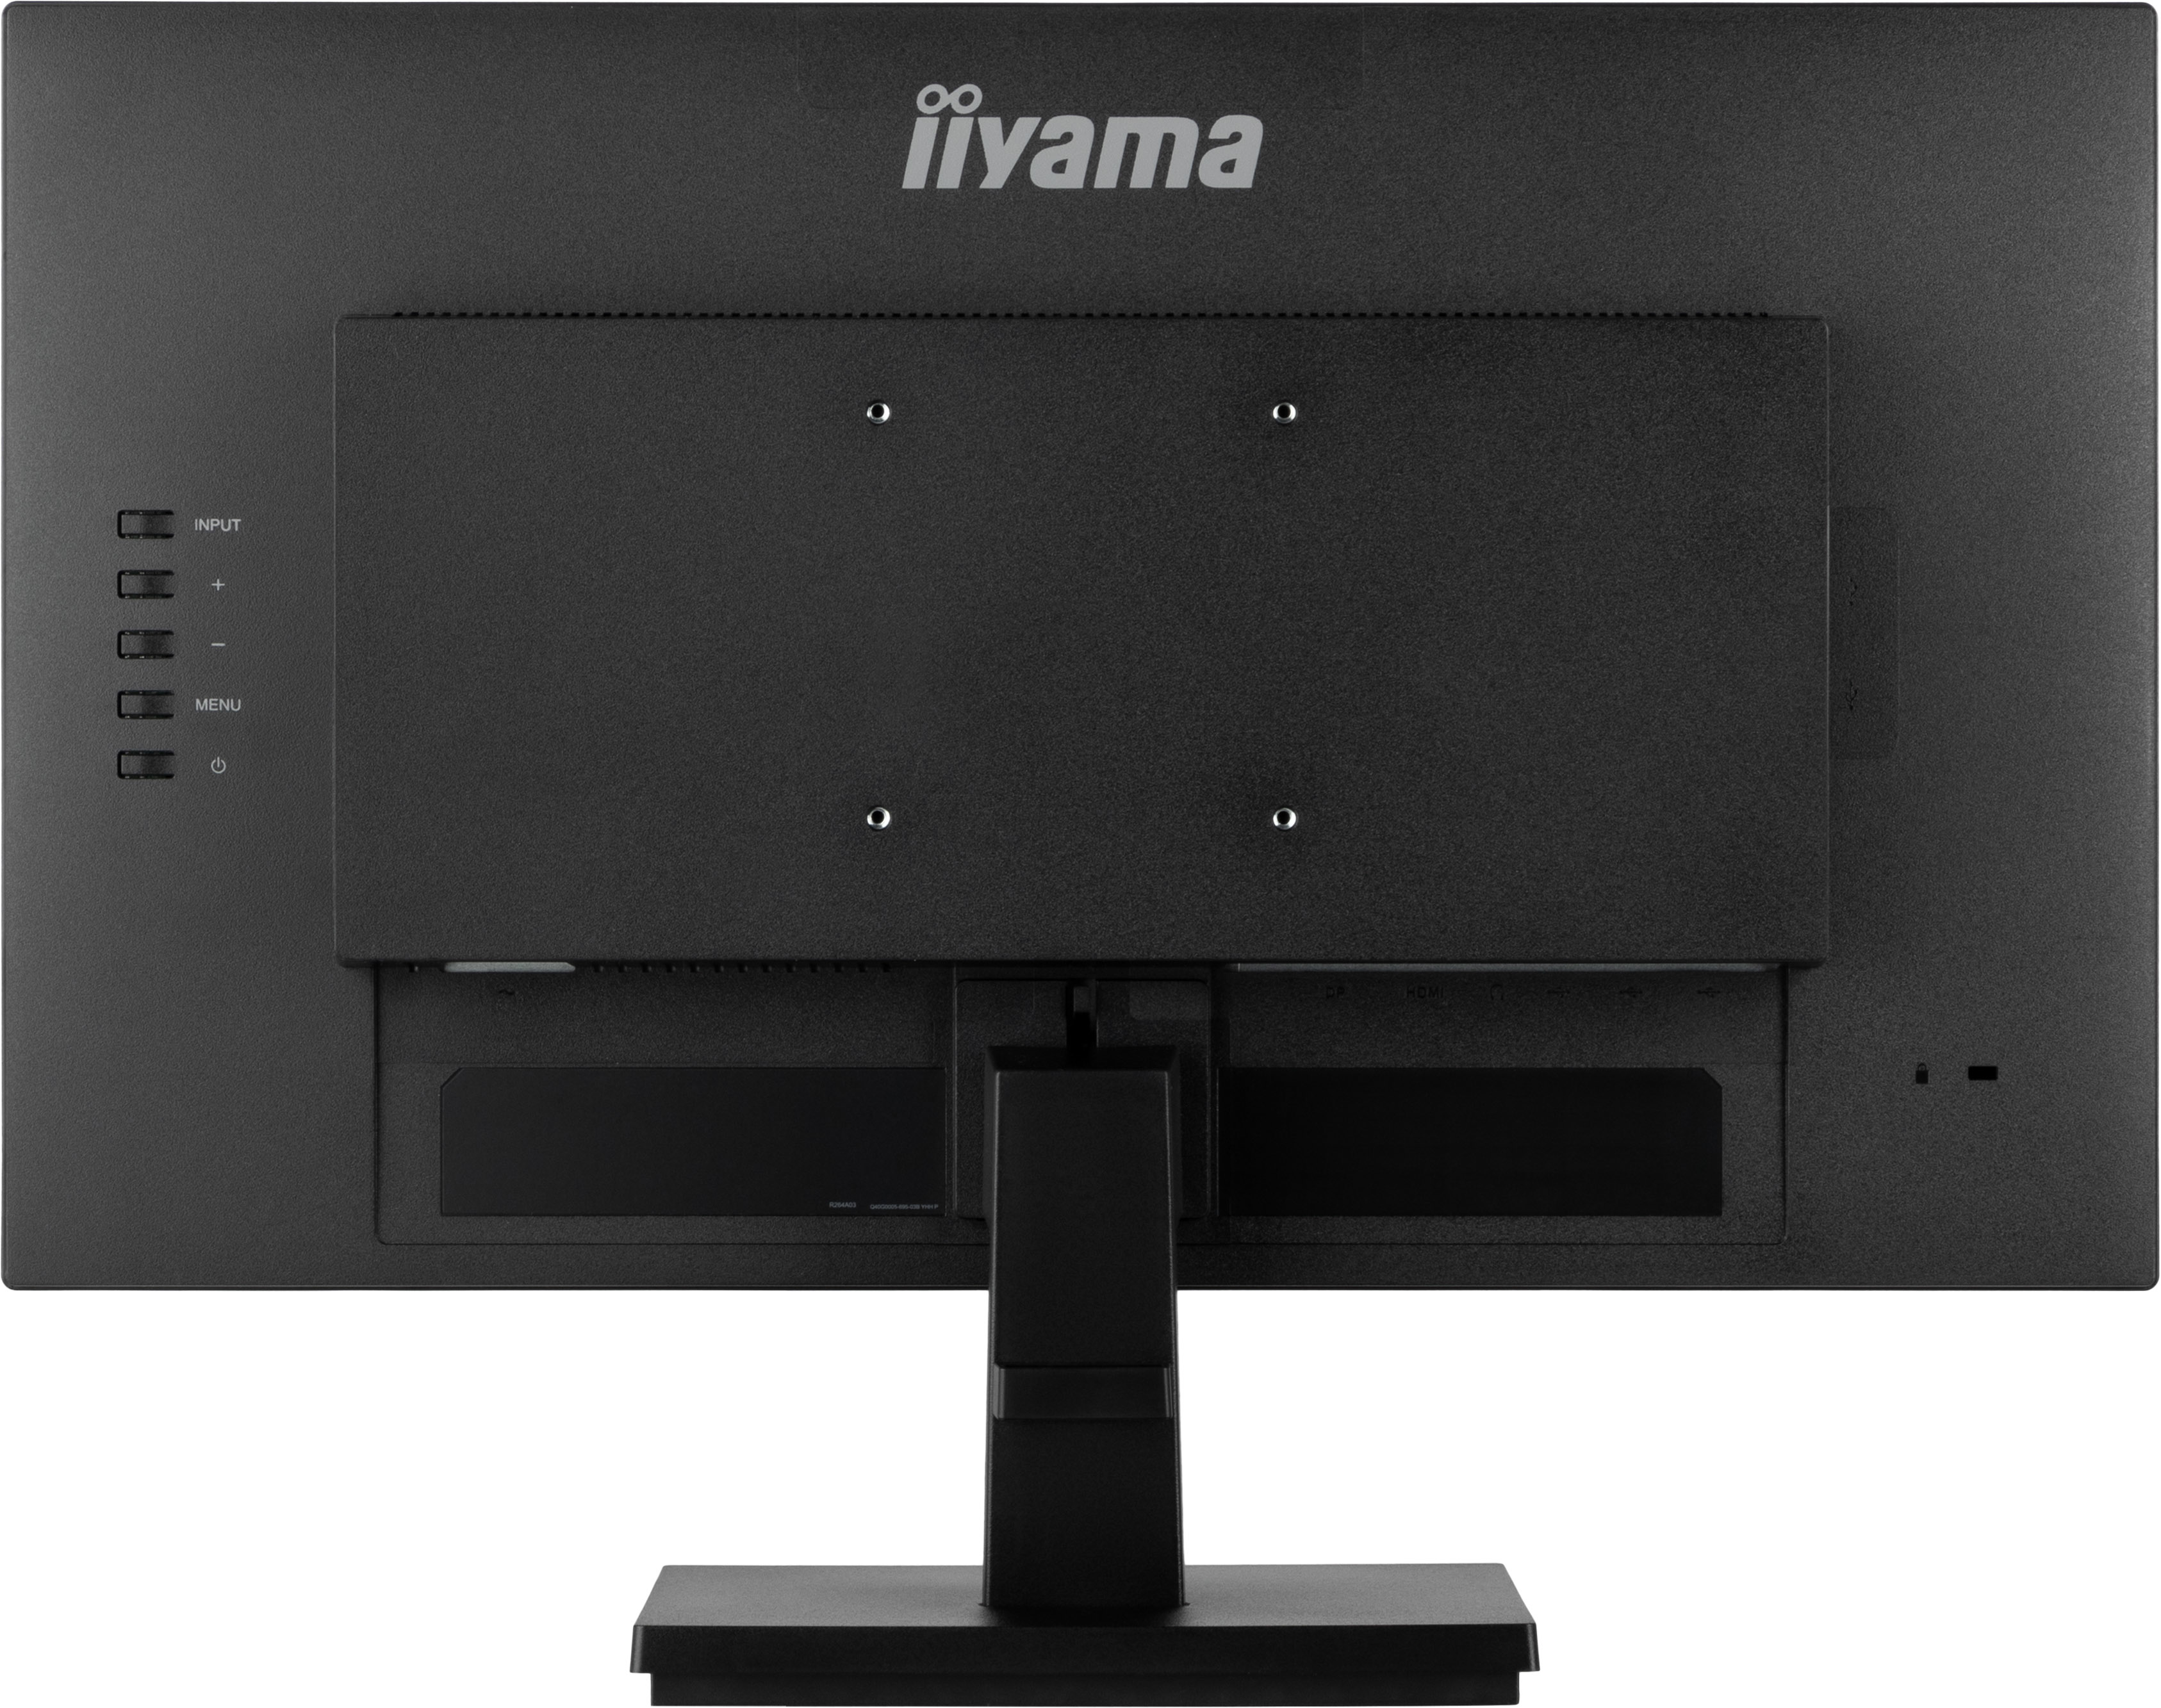 IIYAMA Monitor XU2492HSU-B6